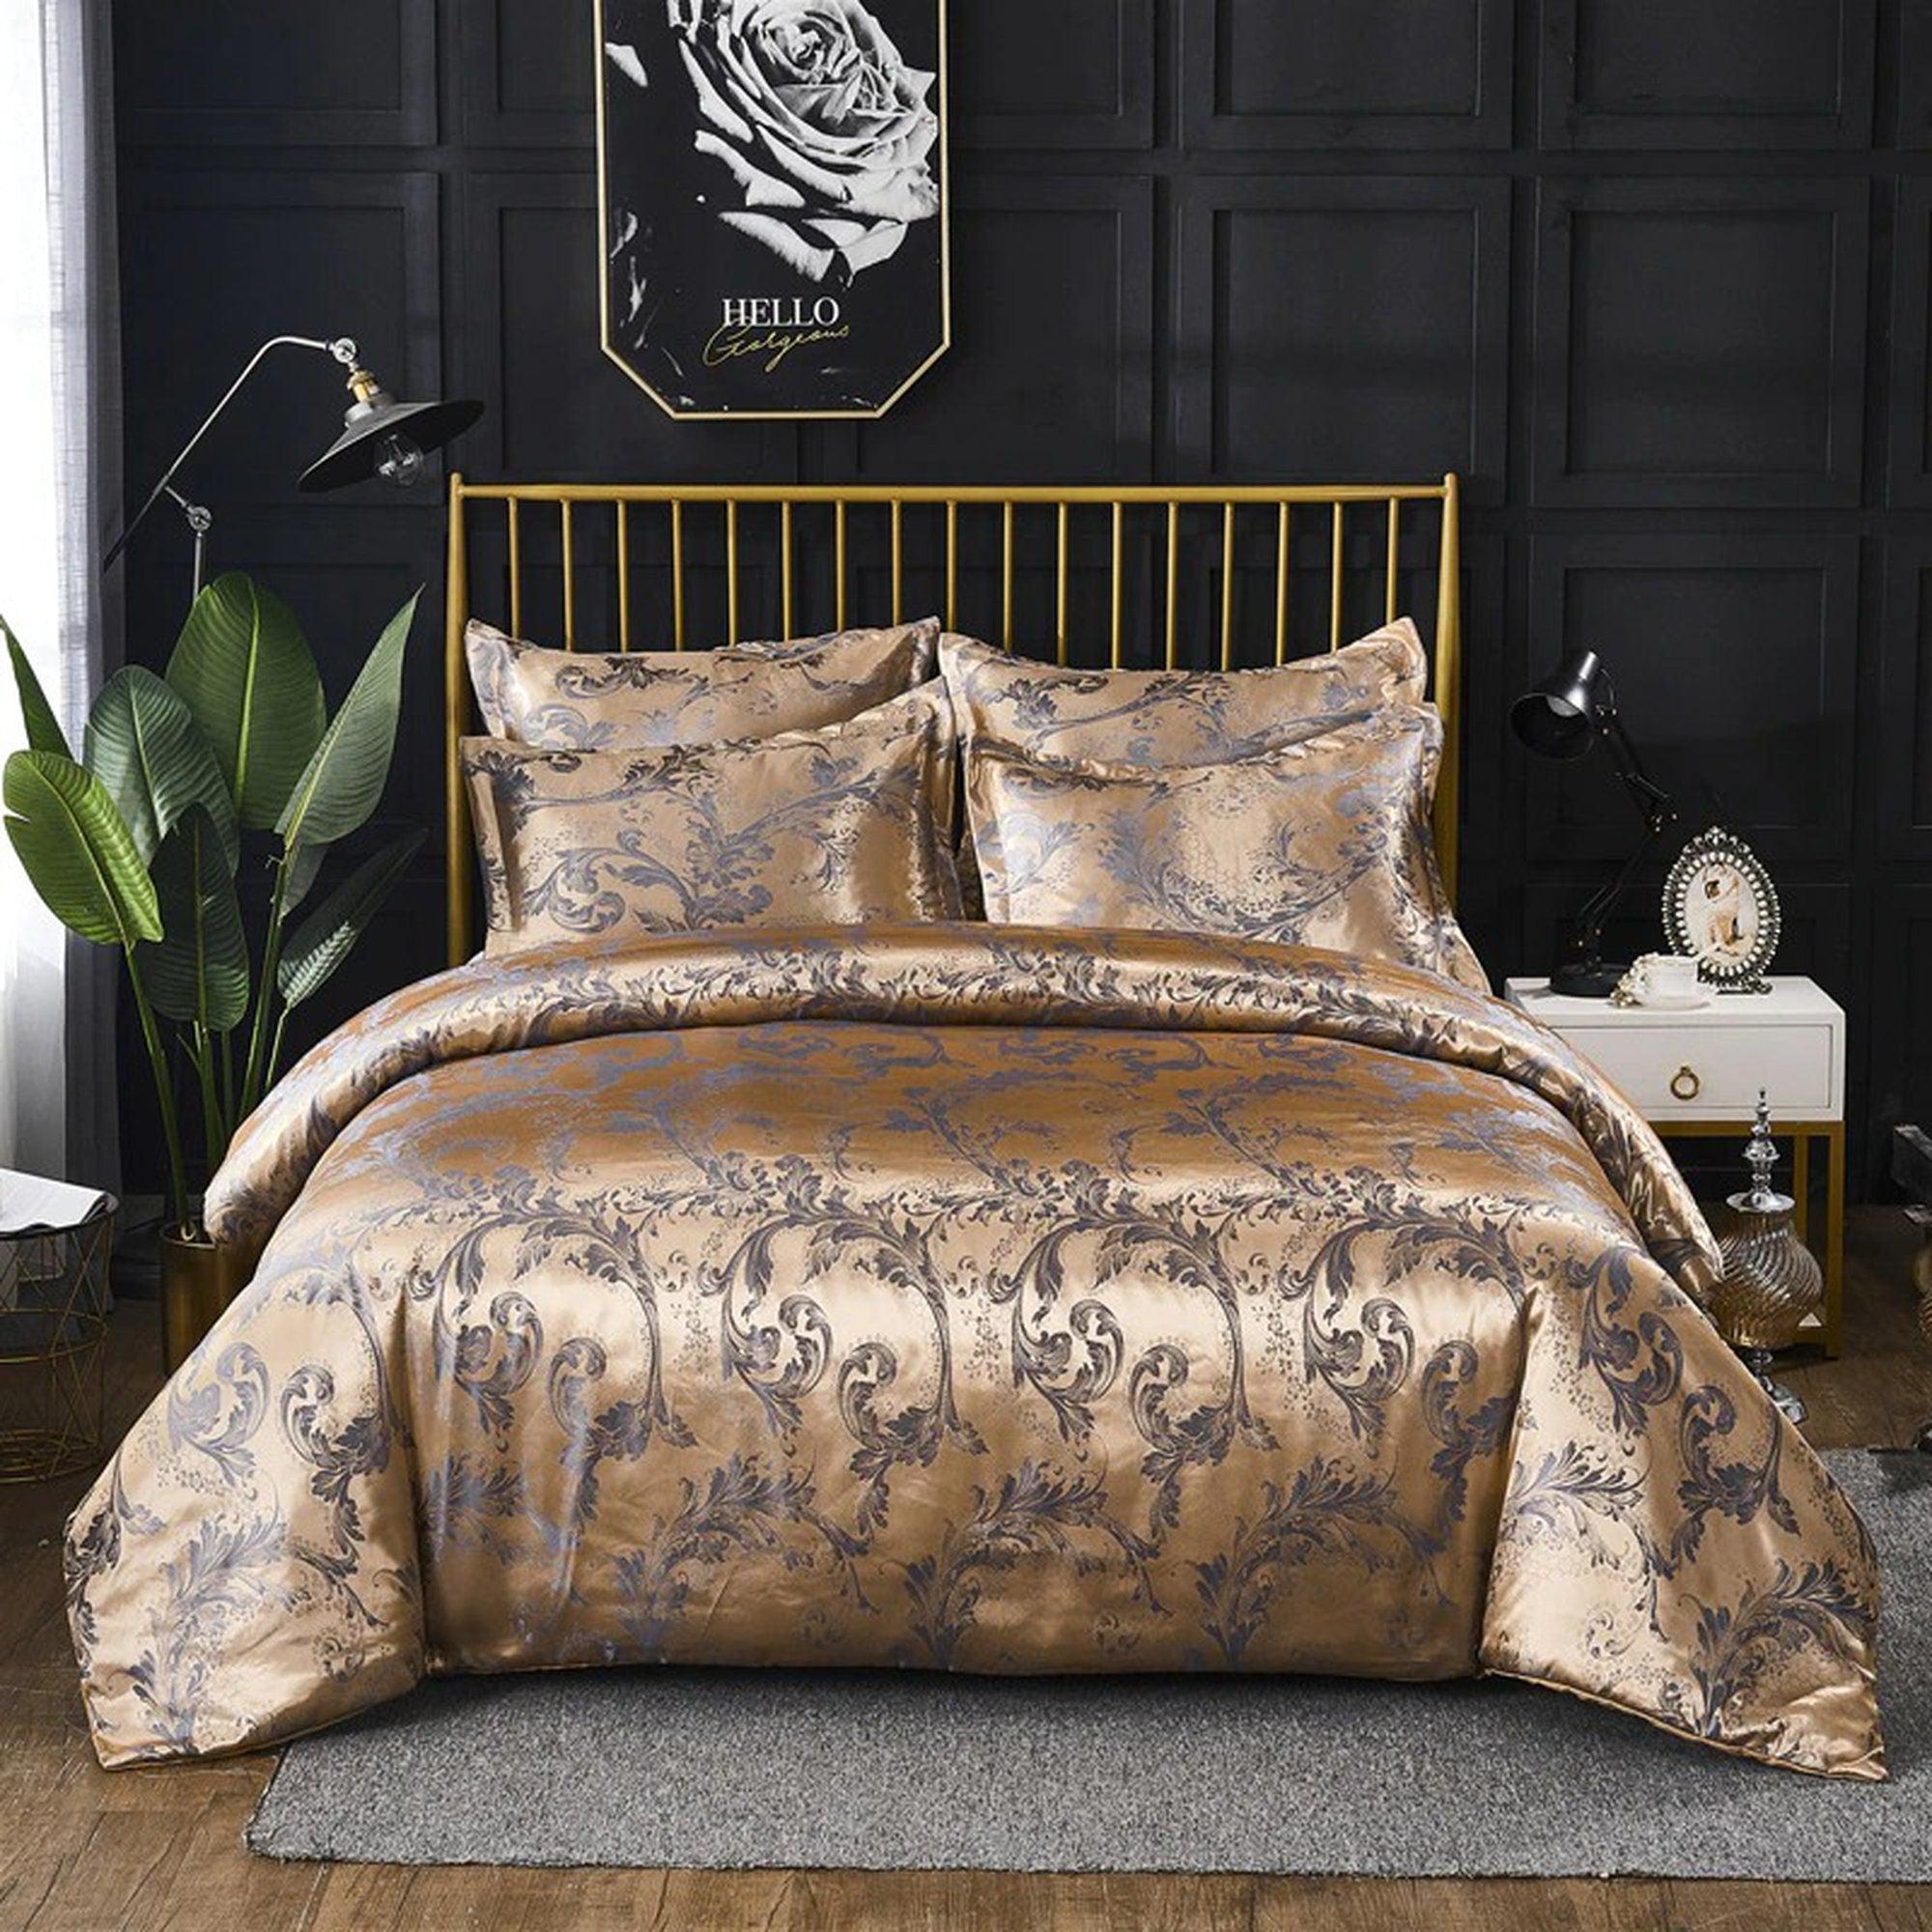 daintyduvet Luxury Gold Grey Victorian Bedding made with Silky Jacquard Fabric, Damask Duvet Cover Set, Designer Bedding, Aesthetic Duvet King Queen